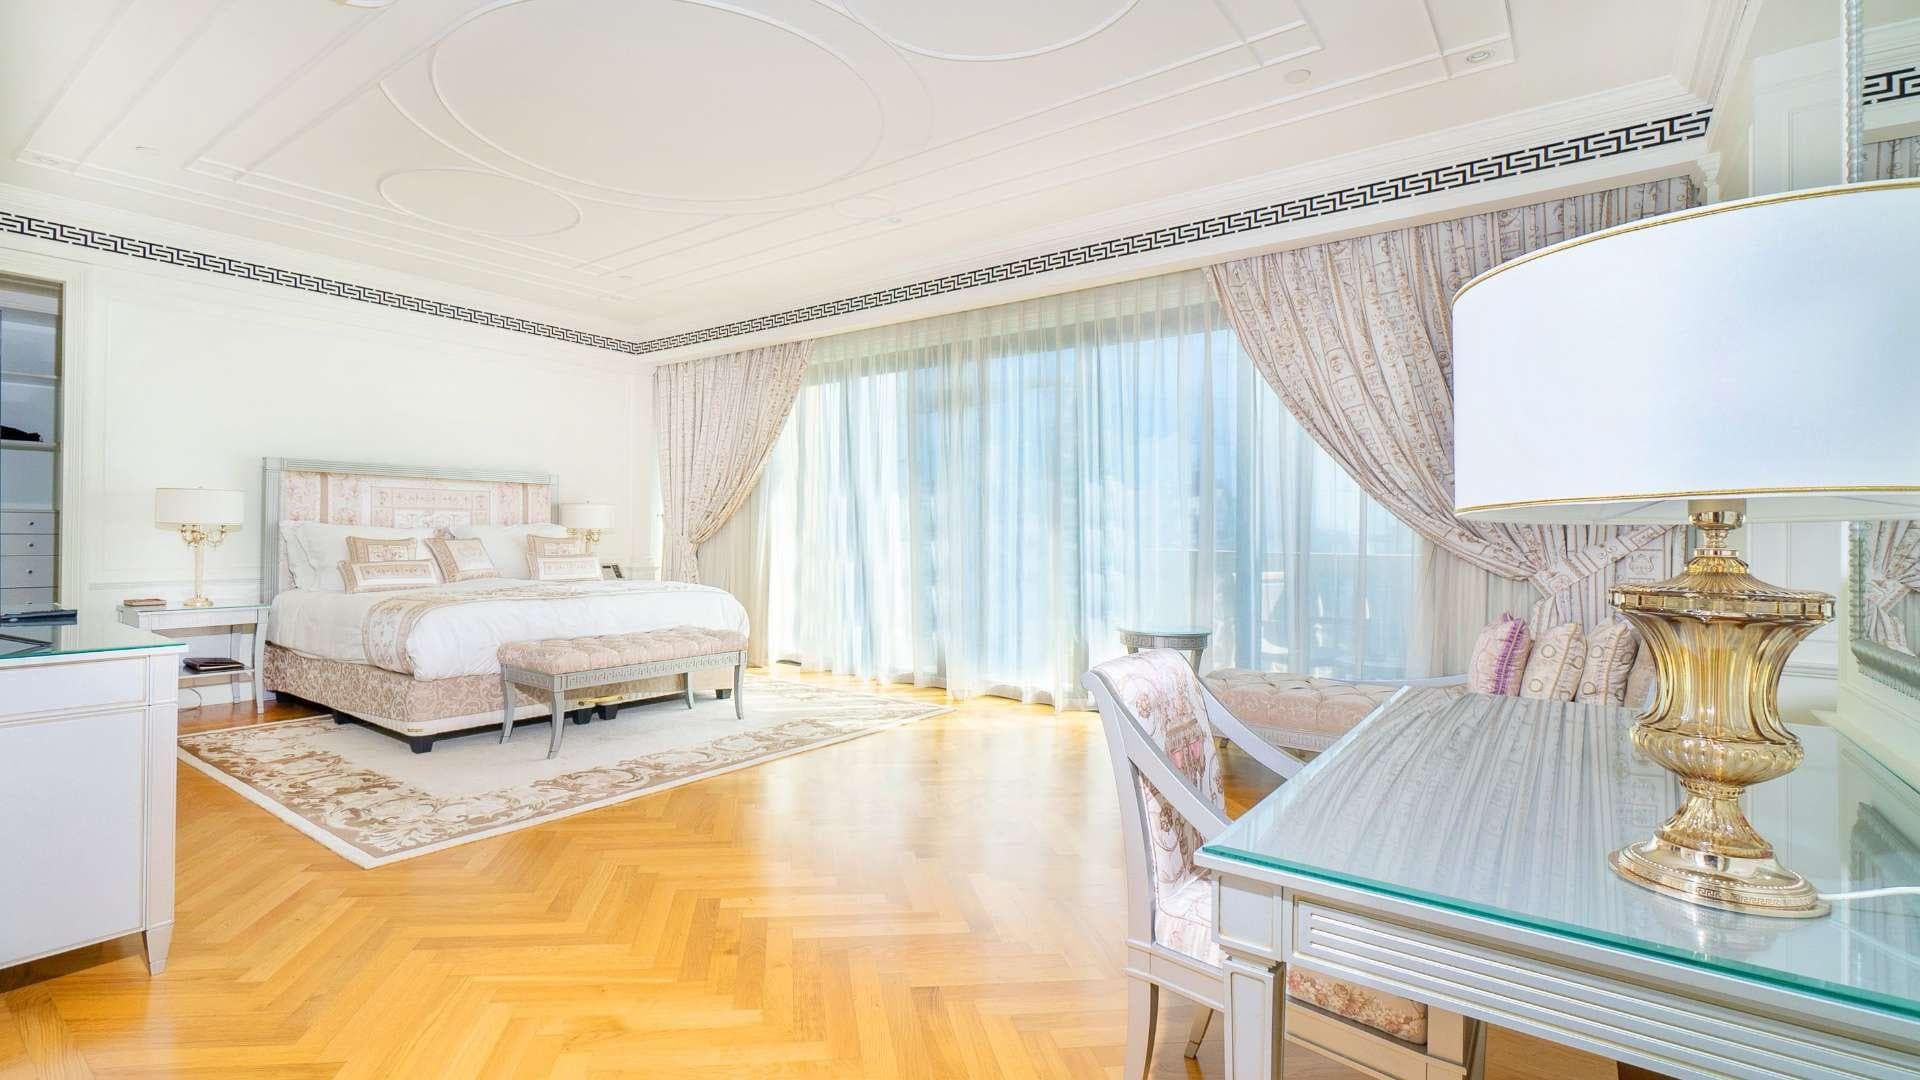 3 Bedroom Apartment For Sale Palazzo Versace Lp18598 18c45d505d8dec00.jpg